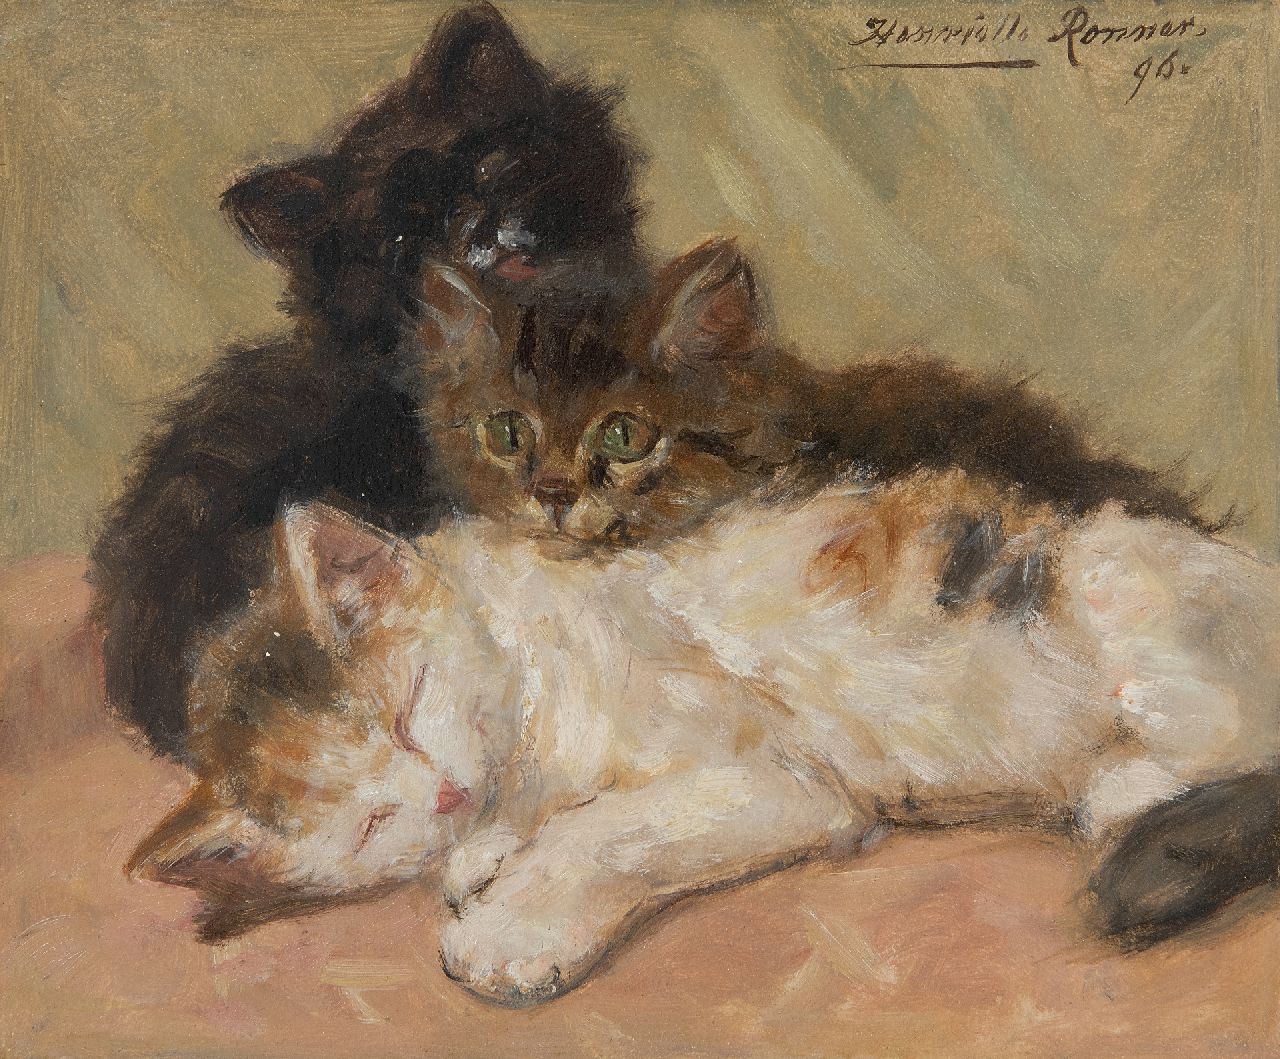 Ronner-Knip H.  | Henriette Ronner-Knip, Drie kittens, olieverf op papier op paneel 19,0 x 22,5 cm, gesigneerd rechtsboven en gedateerd '96